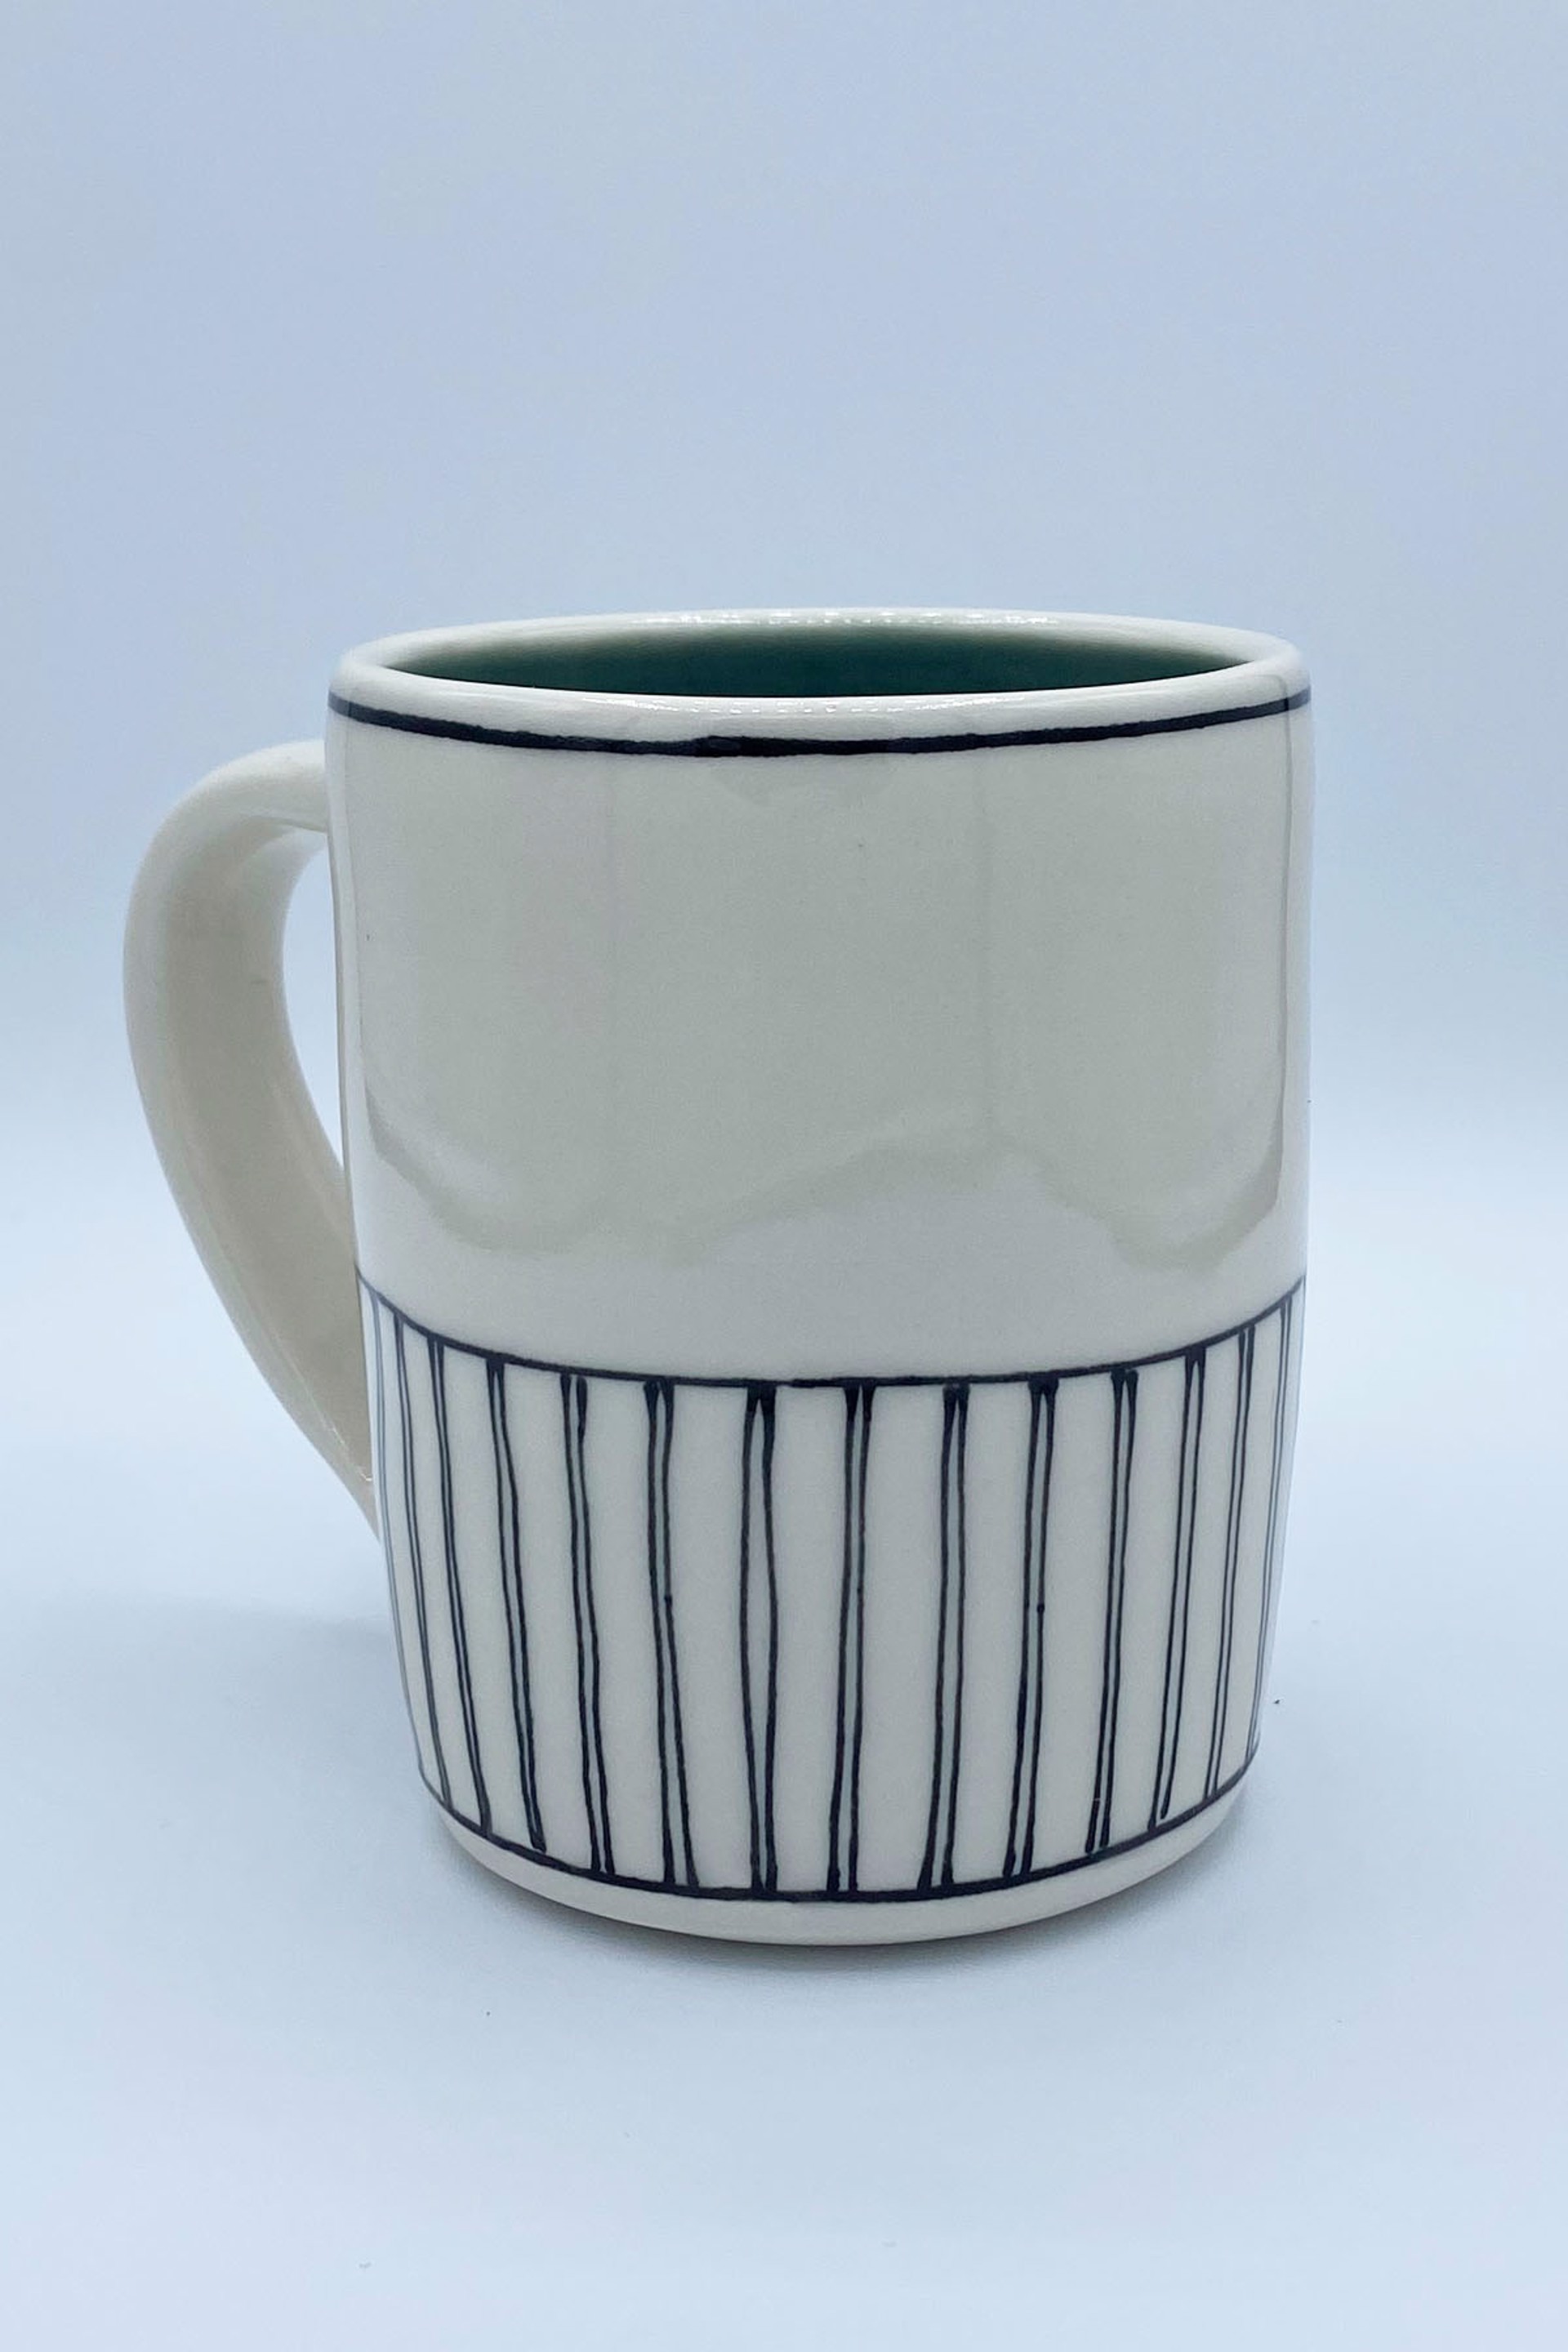 Mug 3 by Laura Cooke